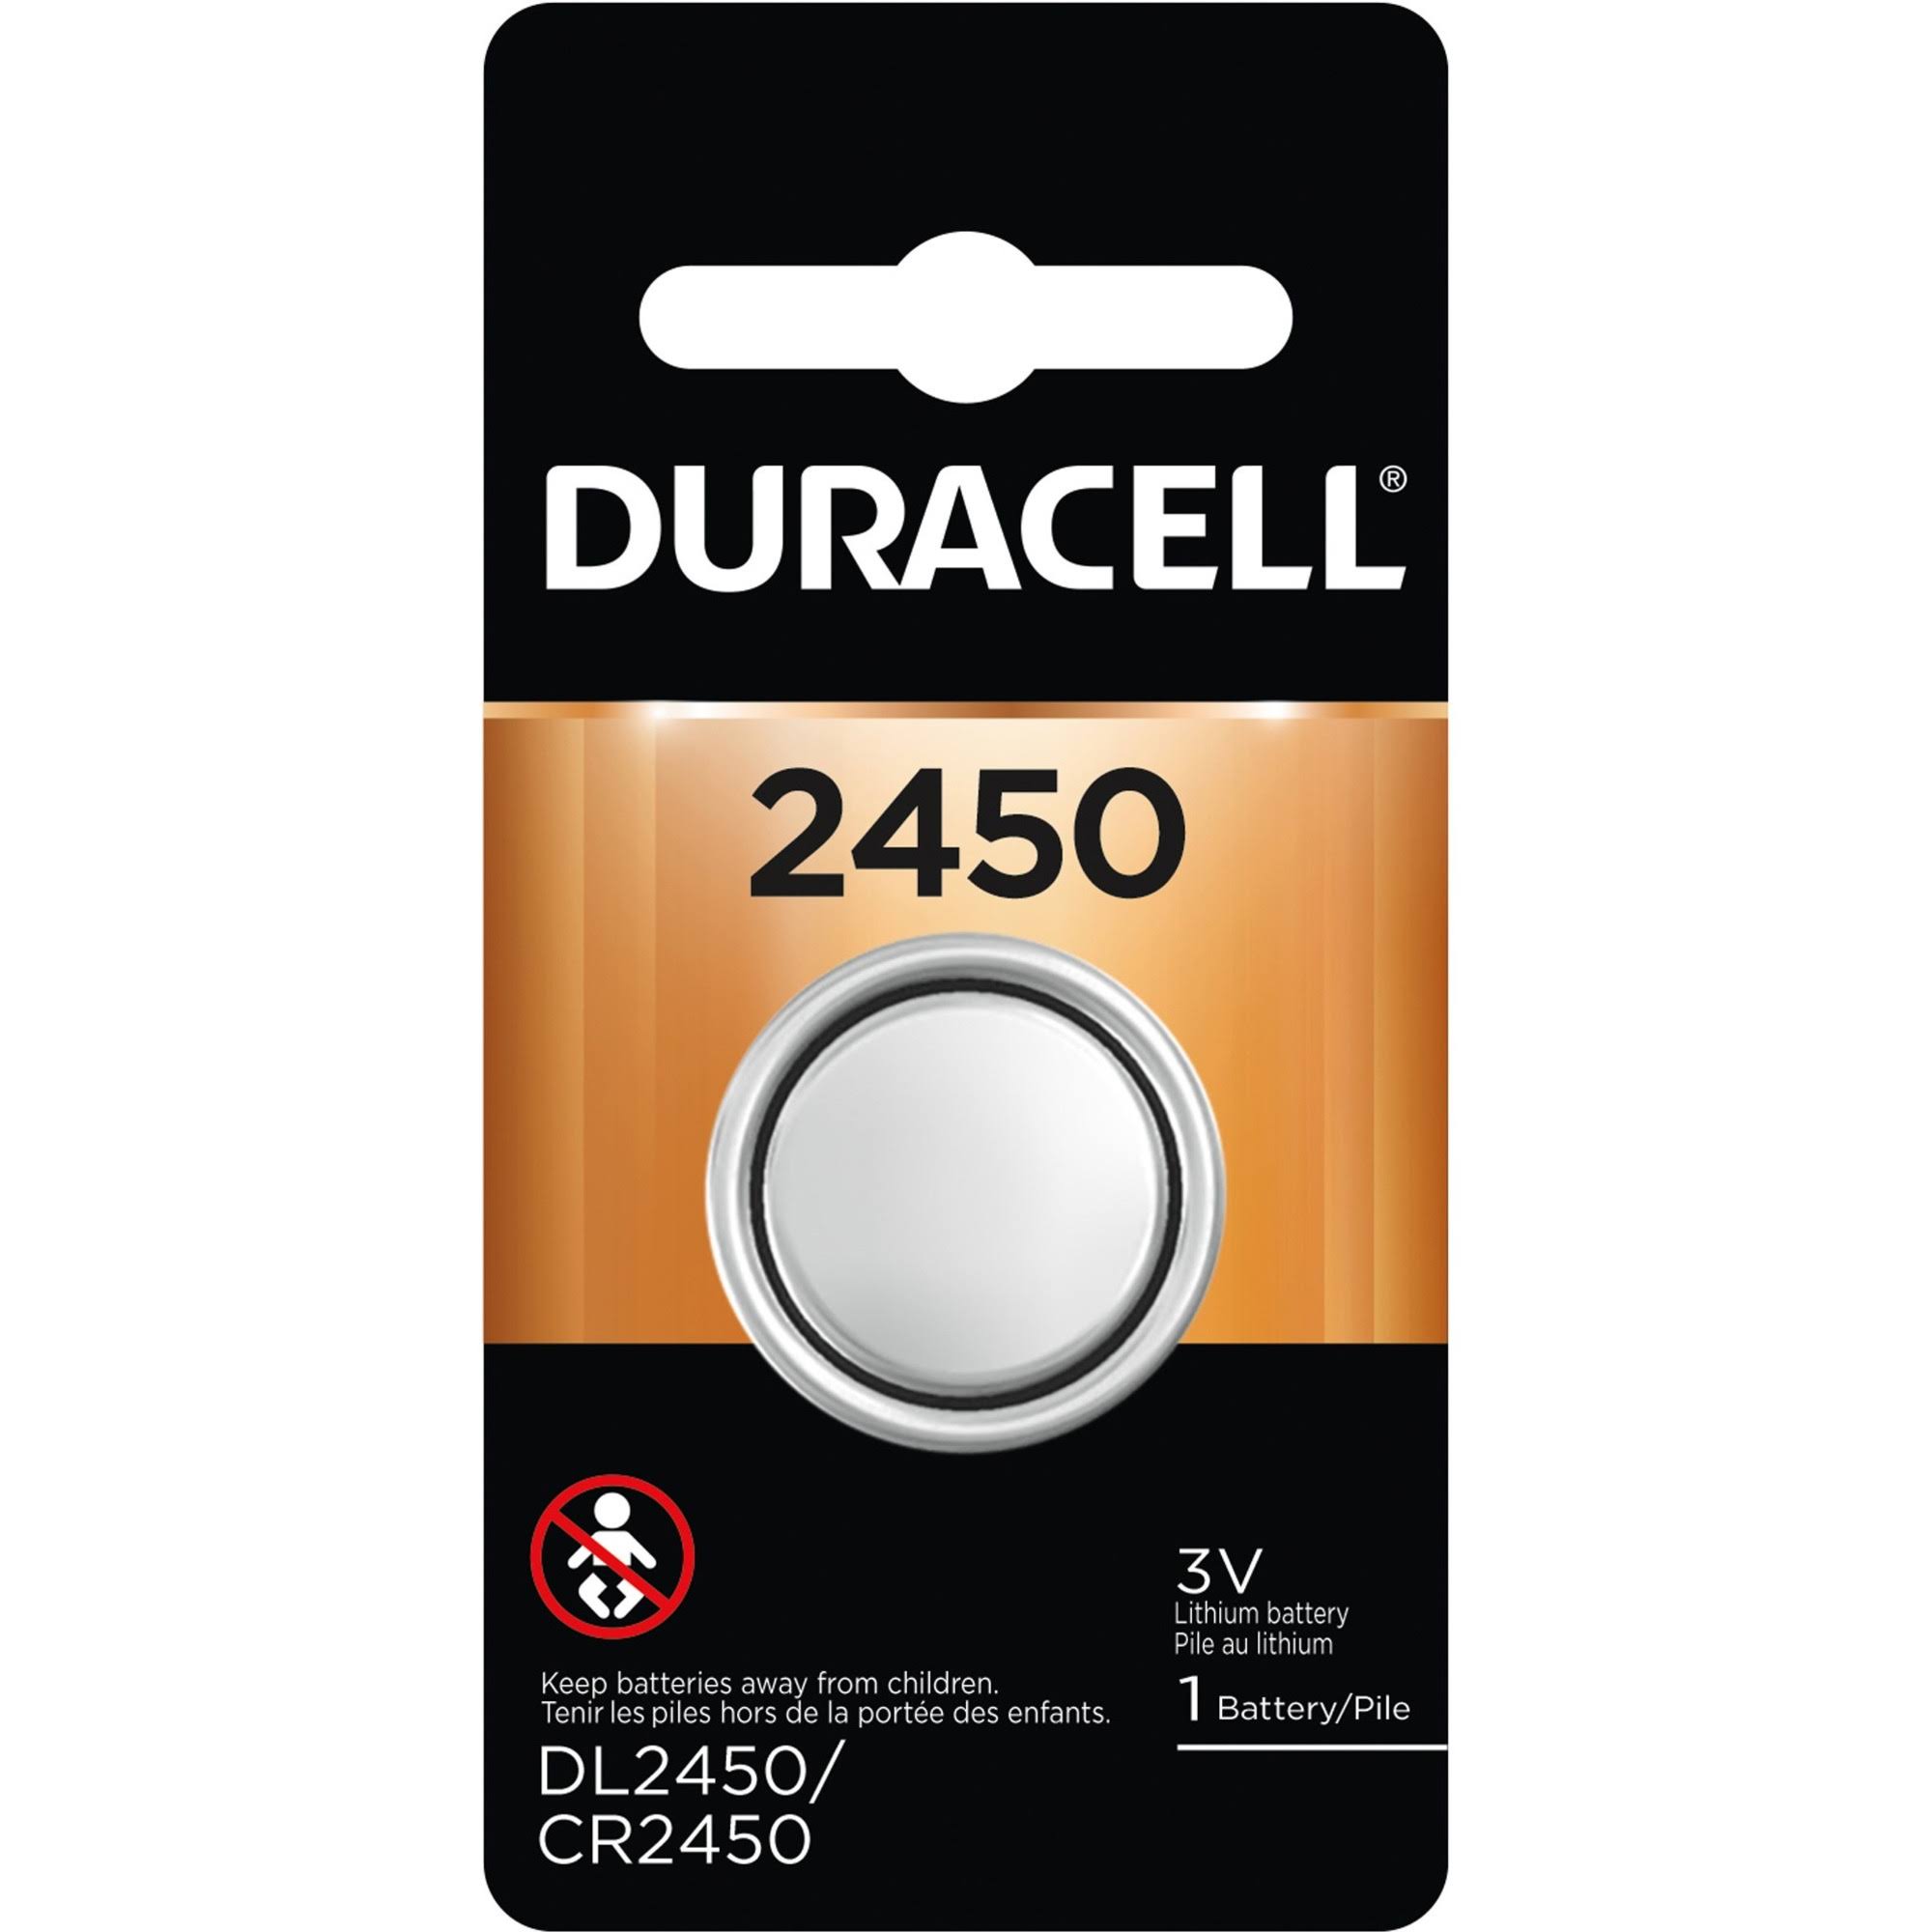 Duracell Coin Button Battery - 3V